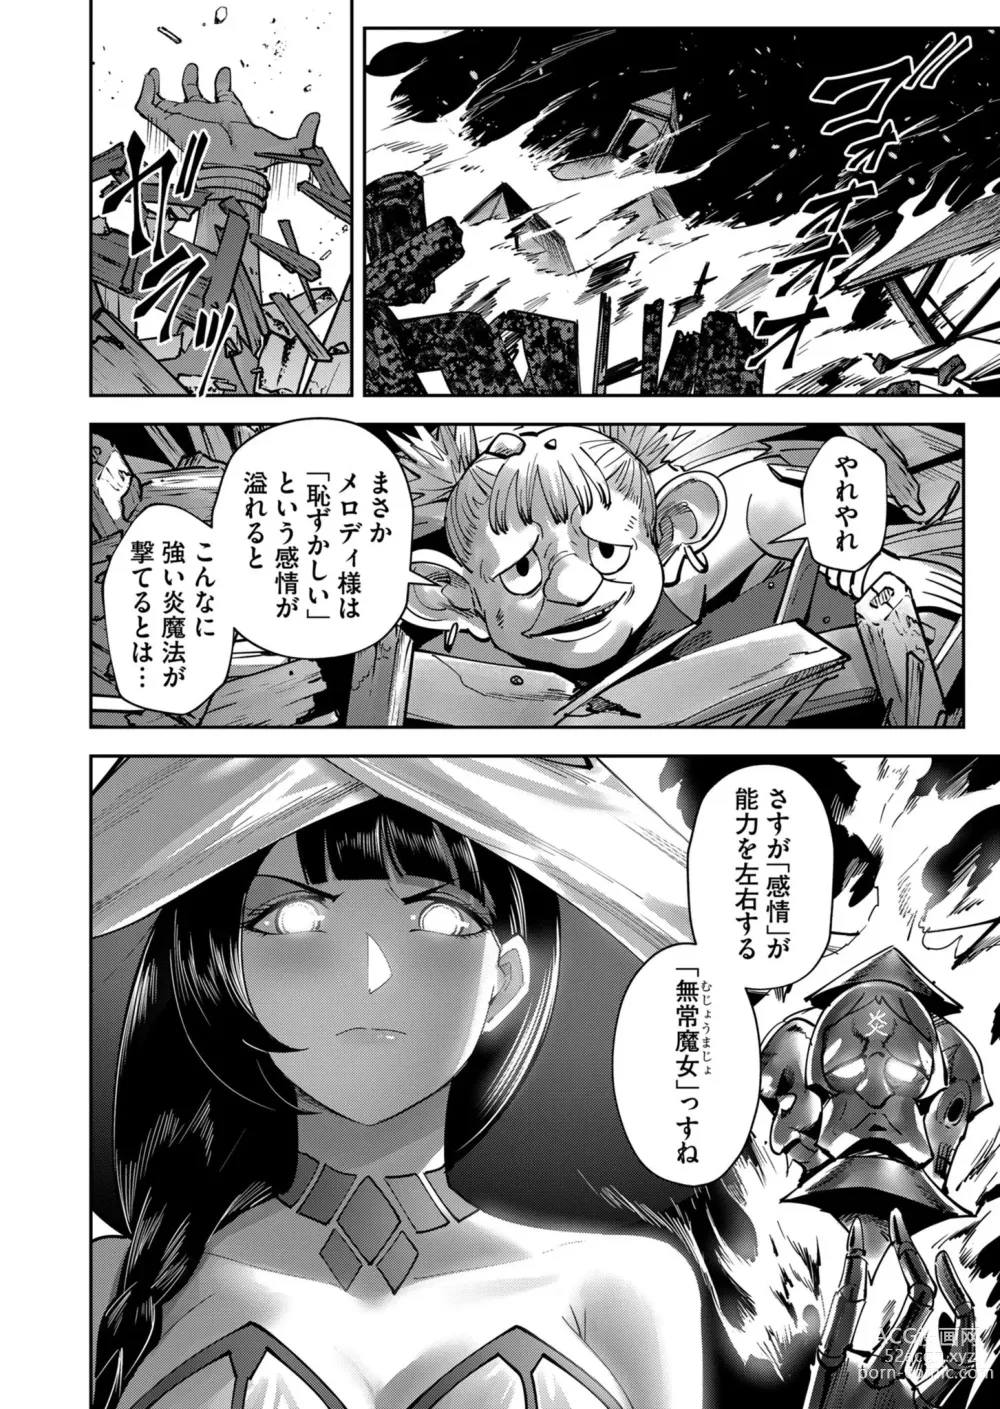 Page 154 of manga Kichiku Eiyuu Vol.04